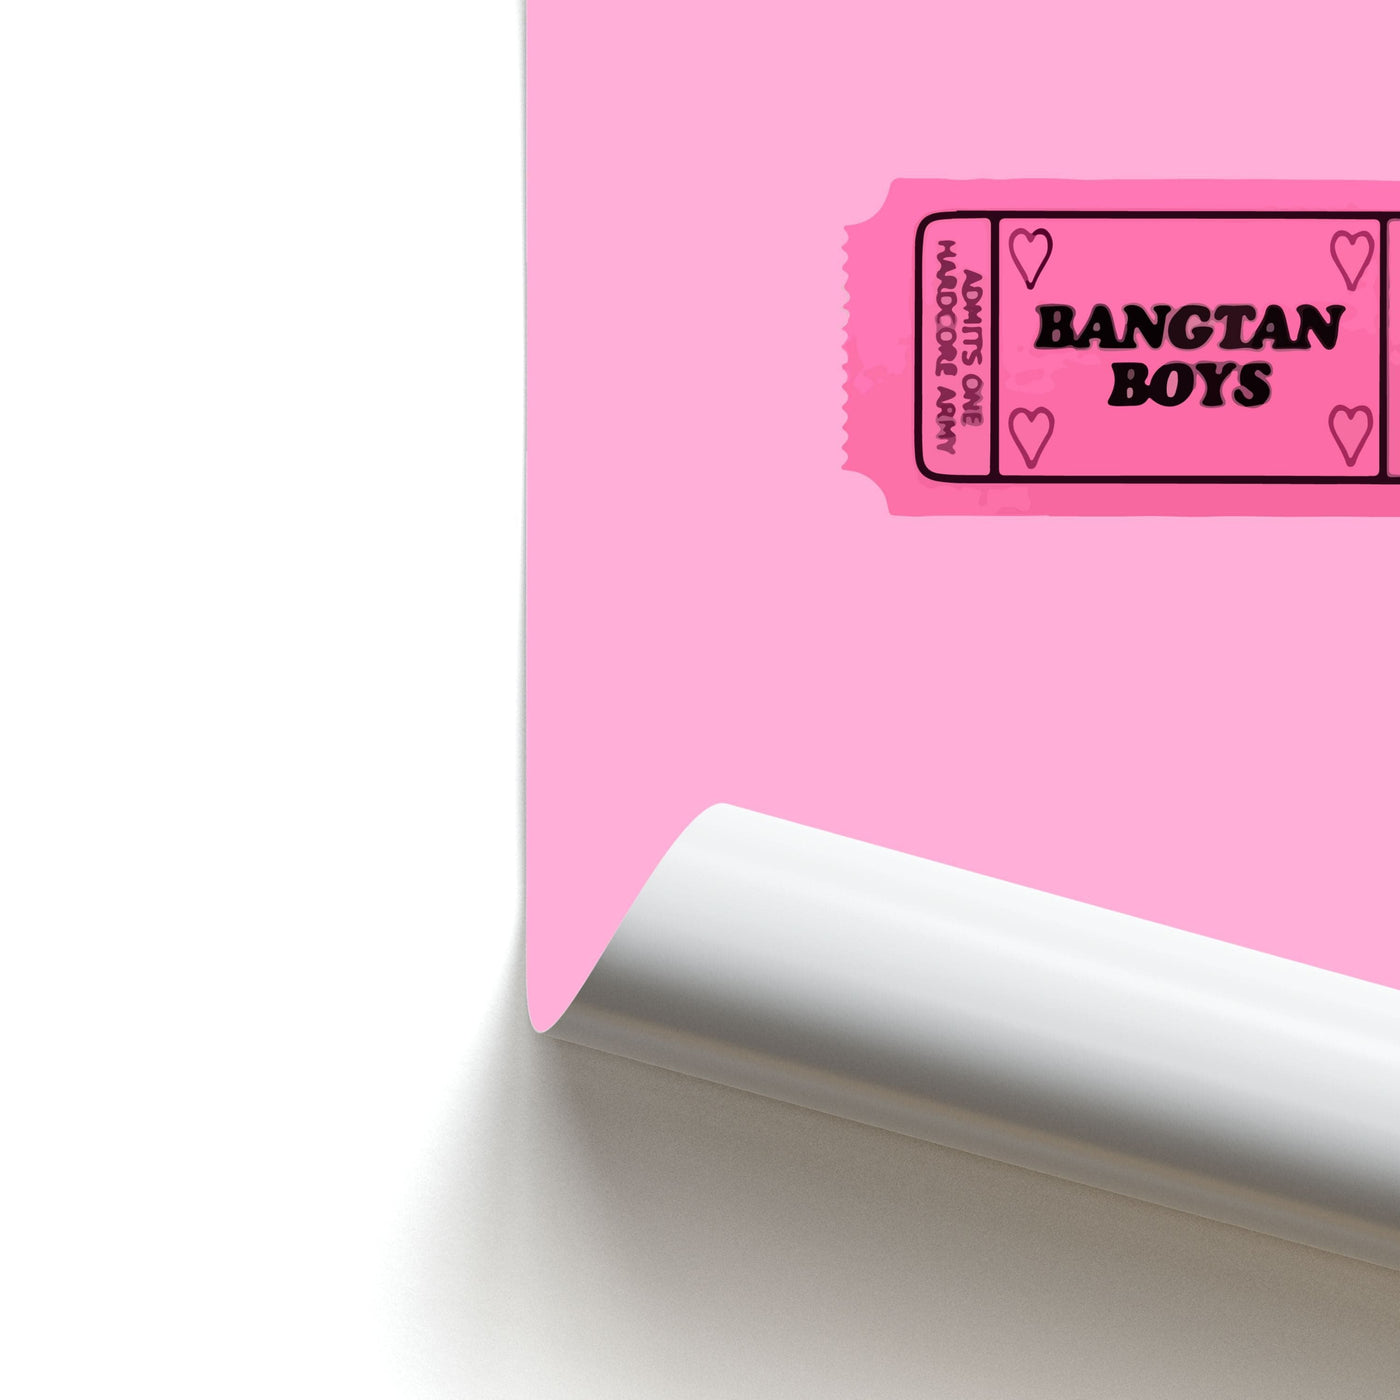 Bangtan Boys Ticket - BTS Poster